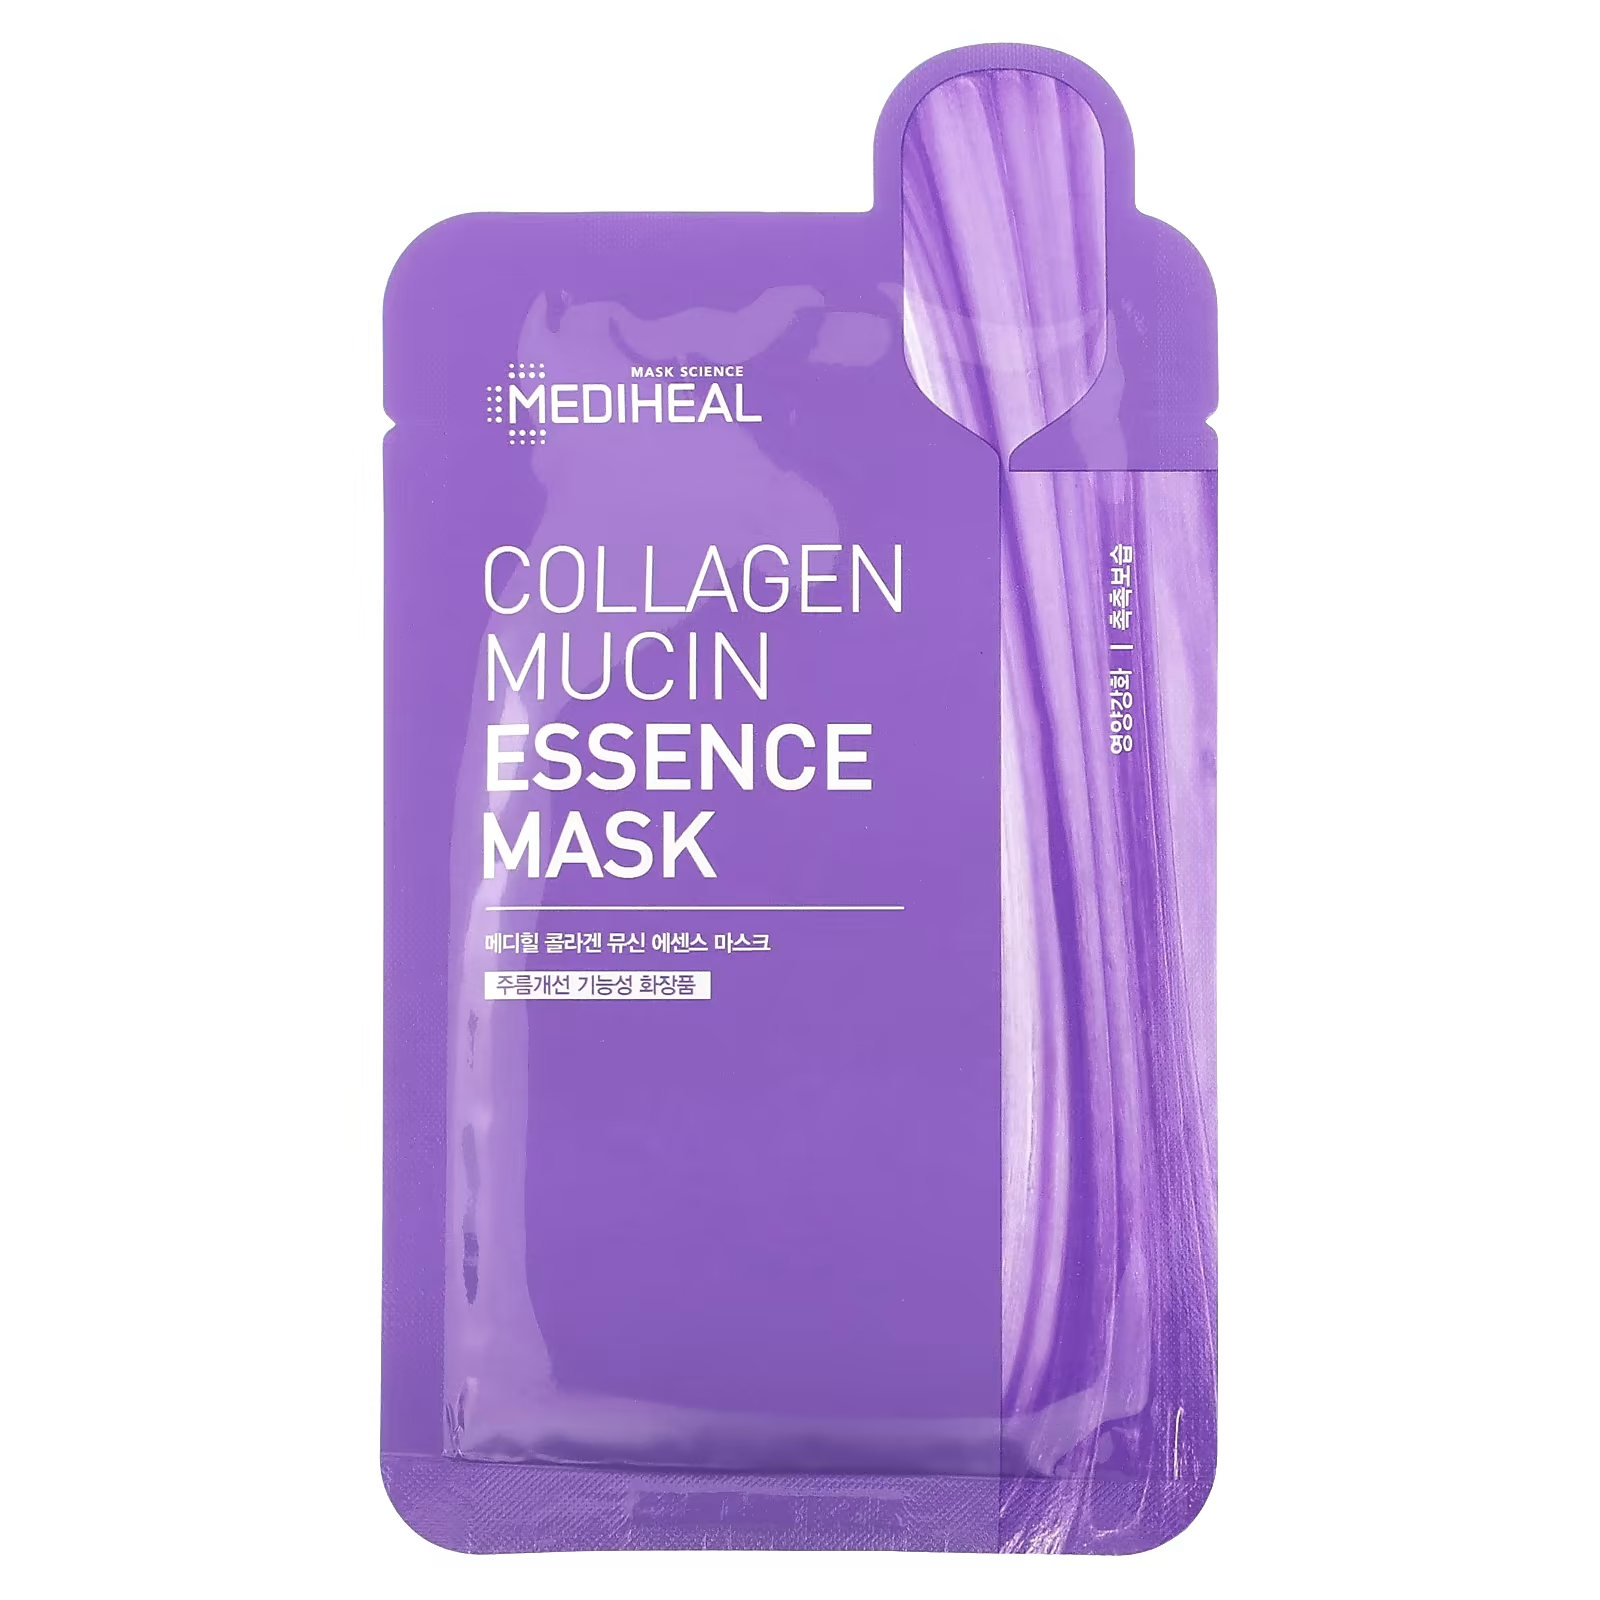 MEDIHEAL Collagen Mucin Essence Beauty Mask, 1 тканевая маска, 0,68 жидких унций (20 мл)